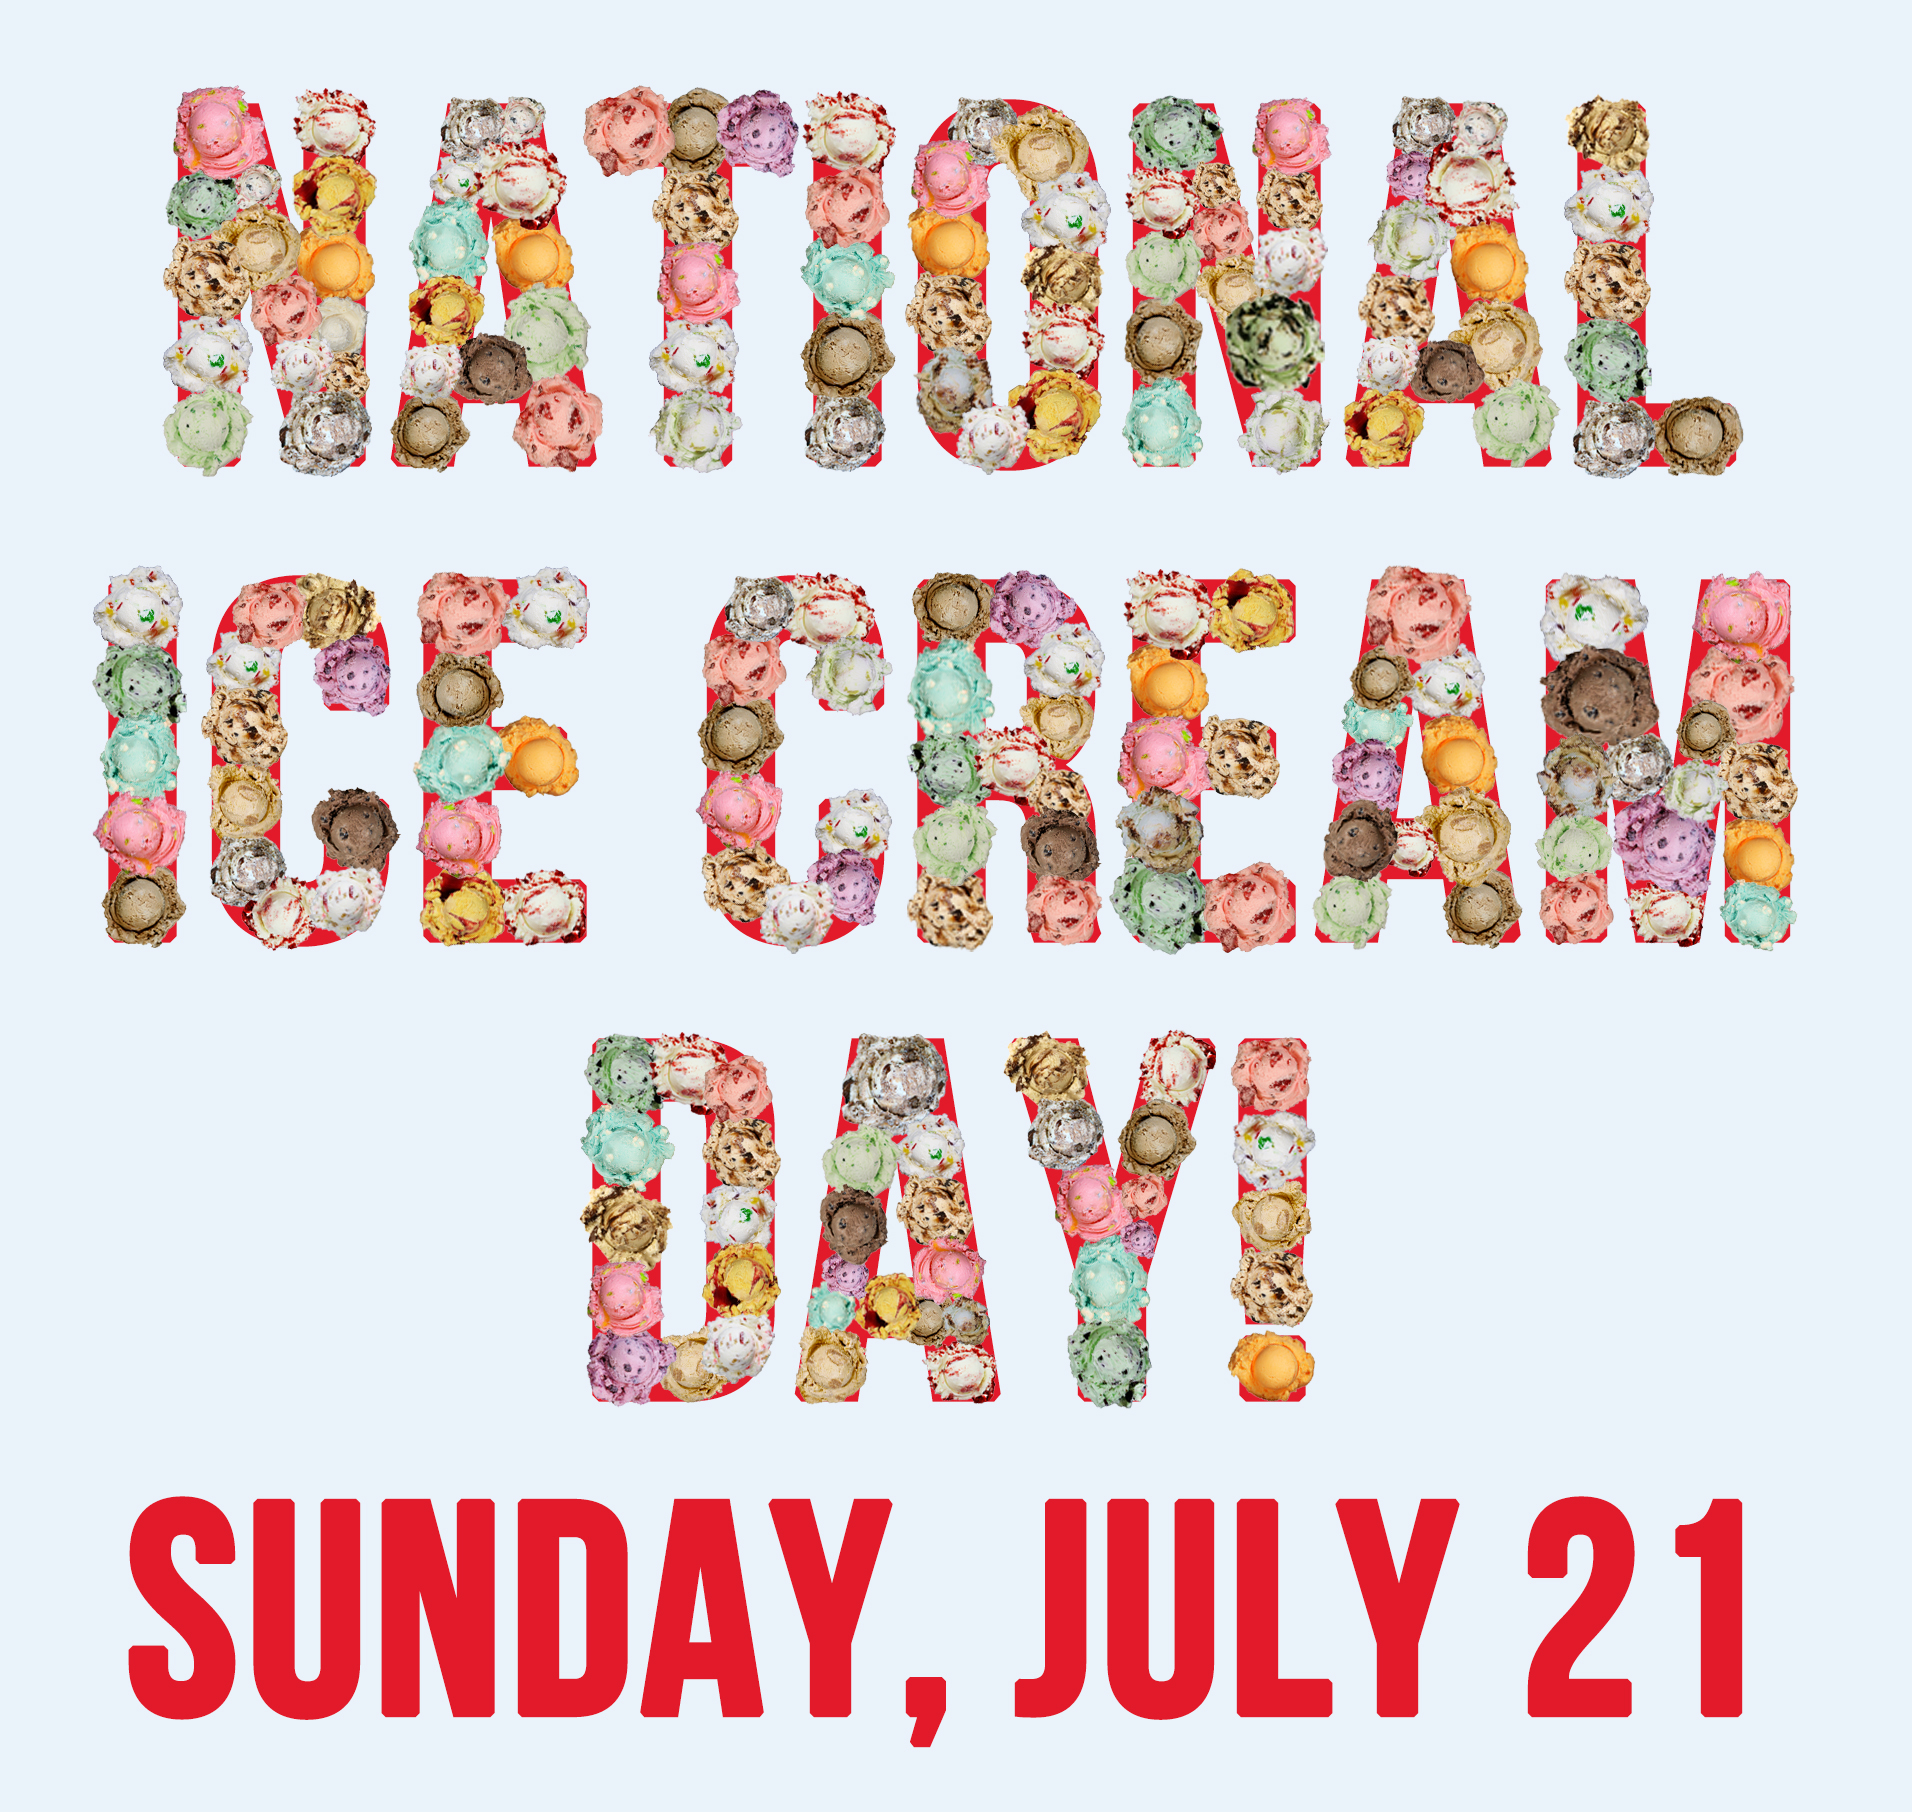 National Ice Cream Day